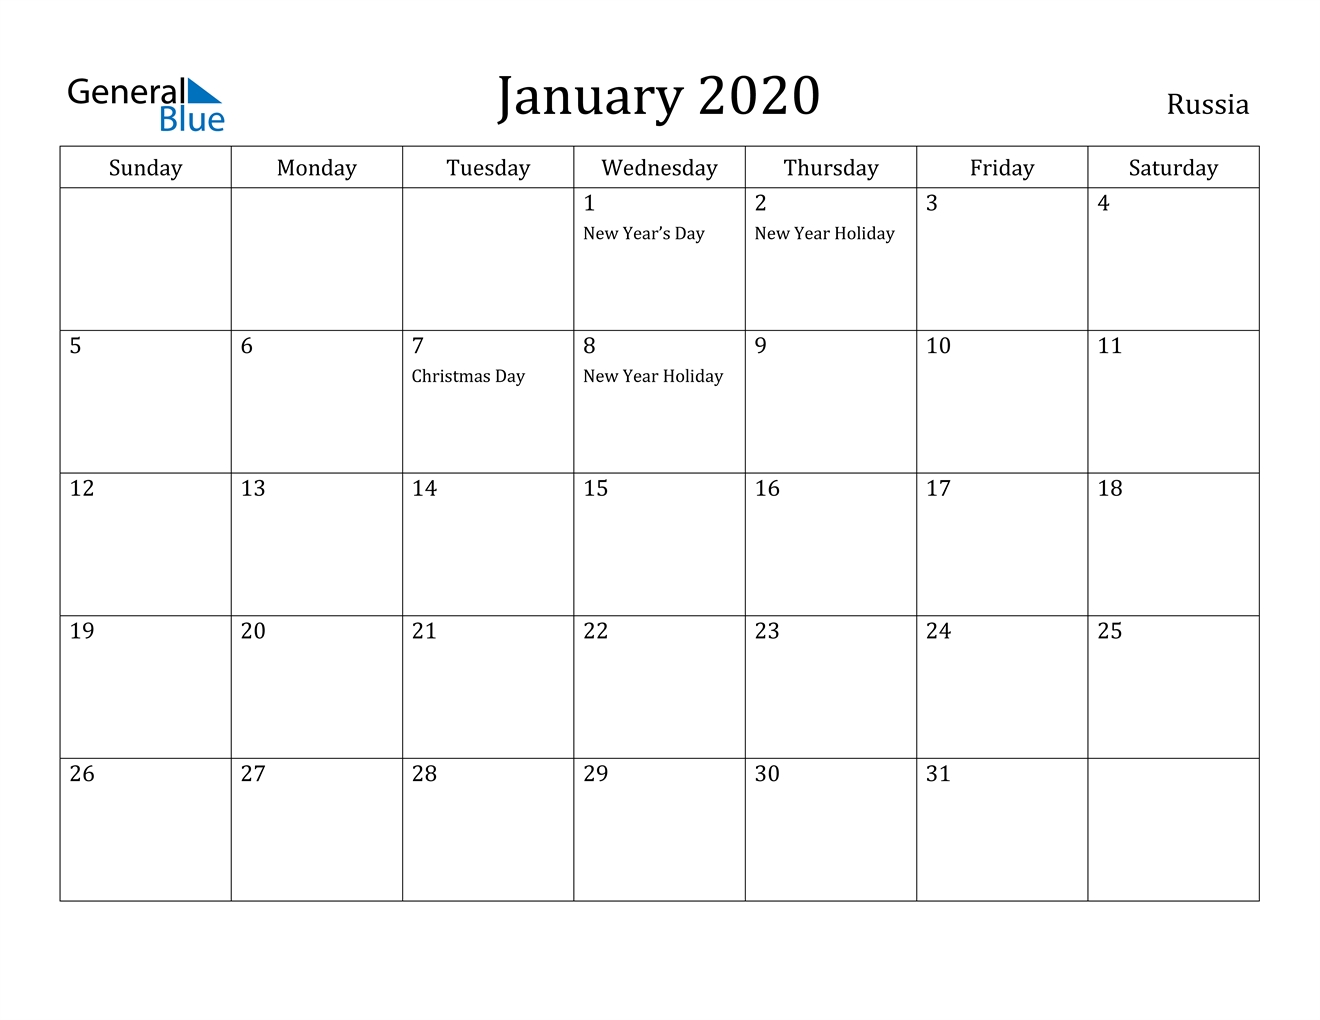 January 2020 Calendar - Russia